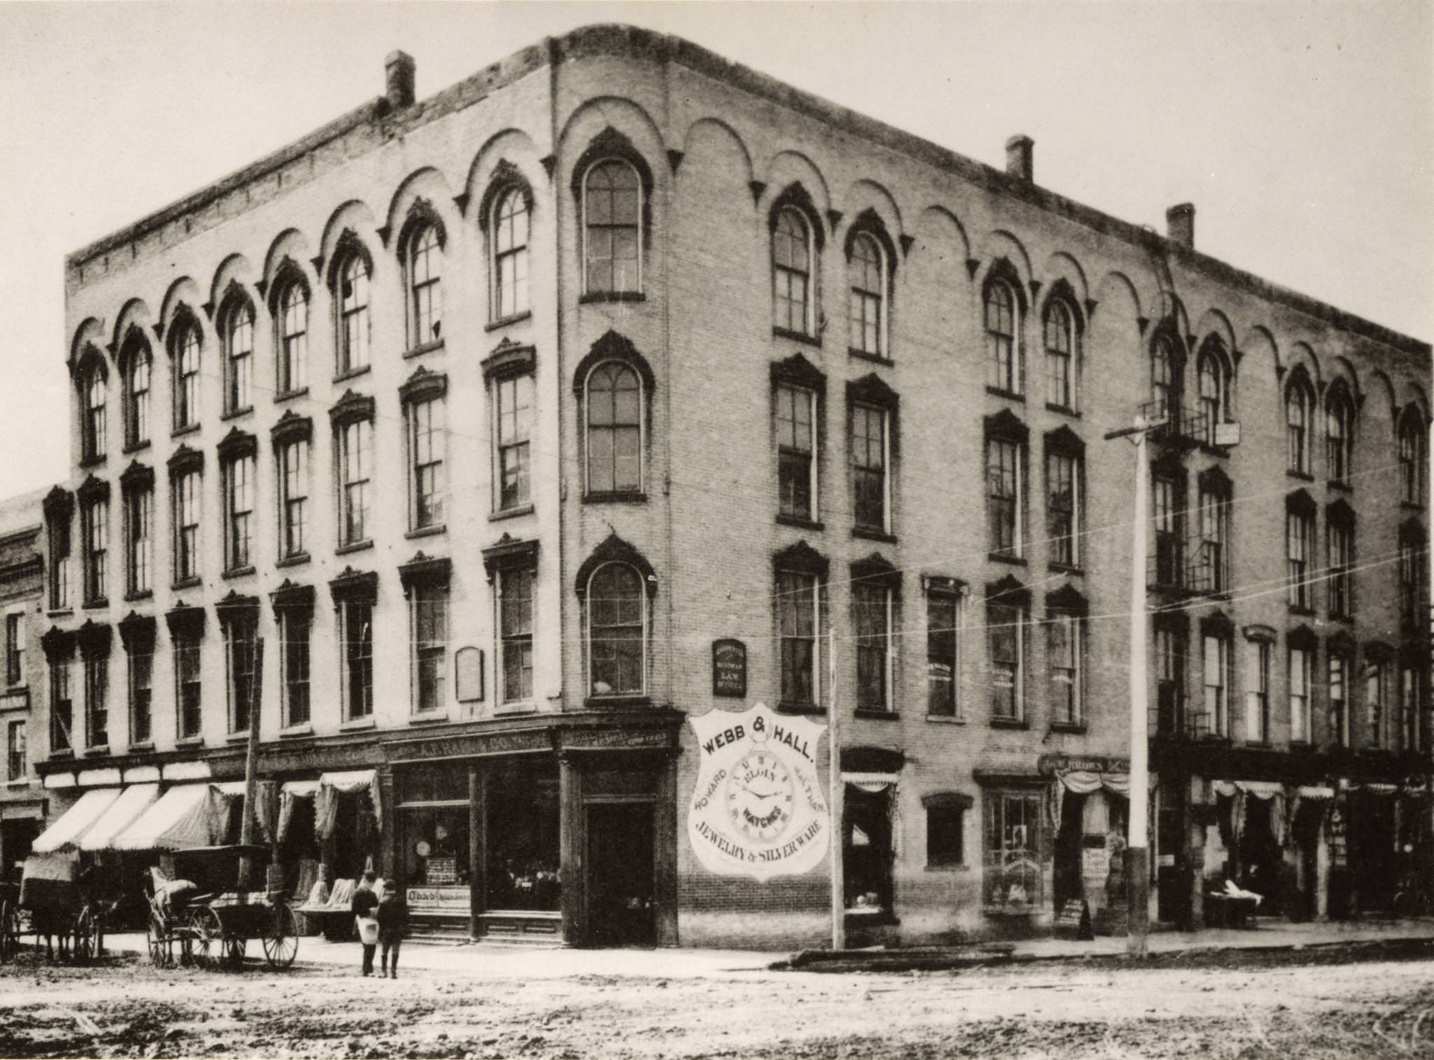 The Lappin block, Ed Carpenter, proprietor, Janesville, Wisconsin, 1892.